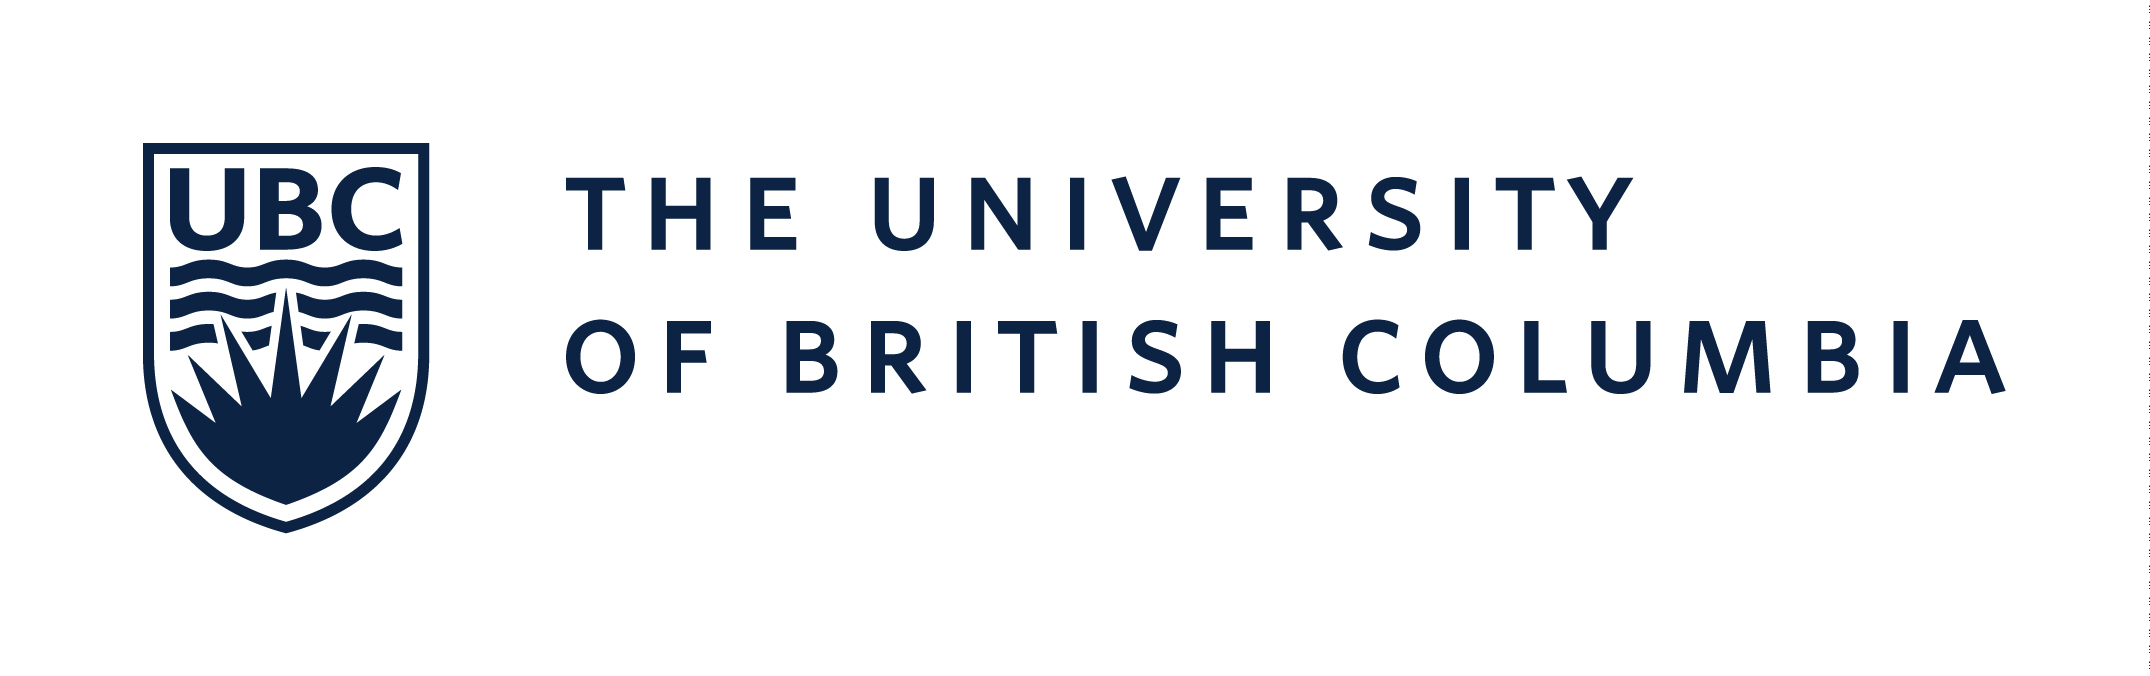 ubc-logo-2018-narrowsig-blue-rgb300